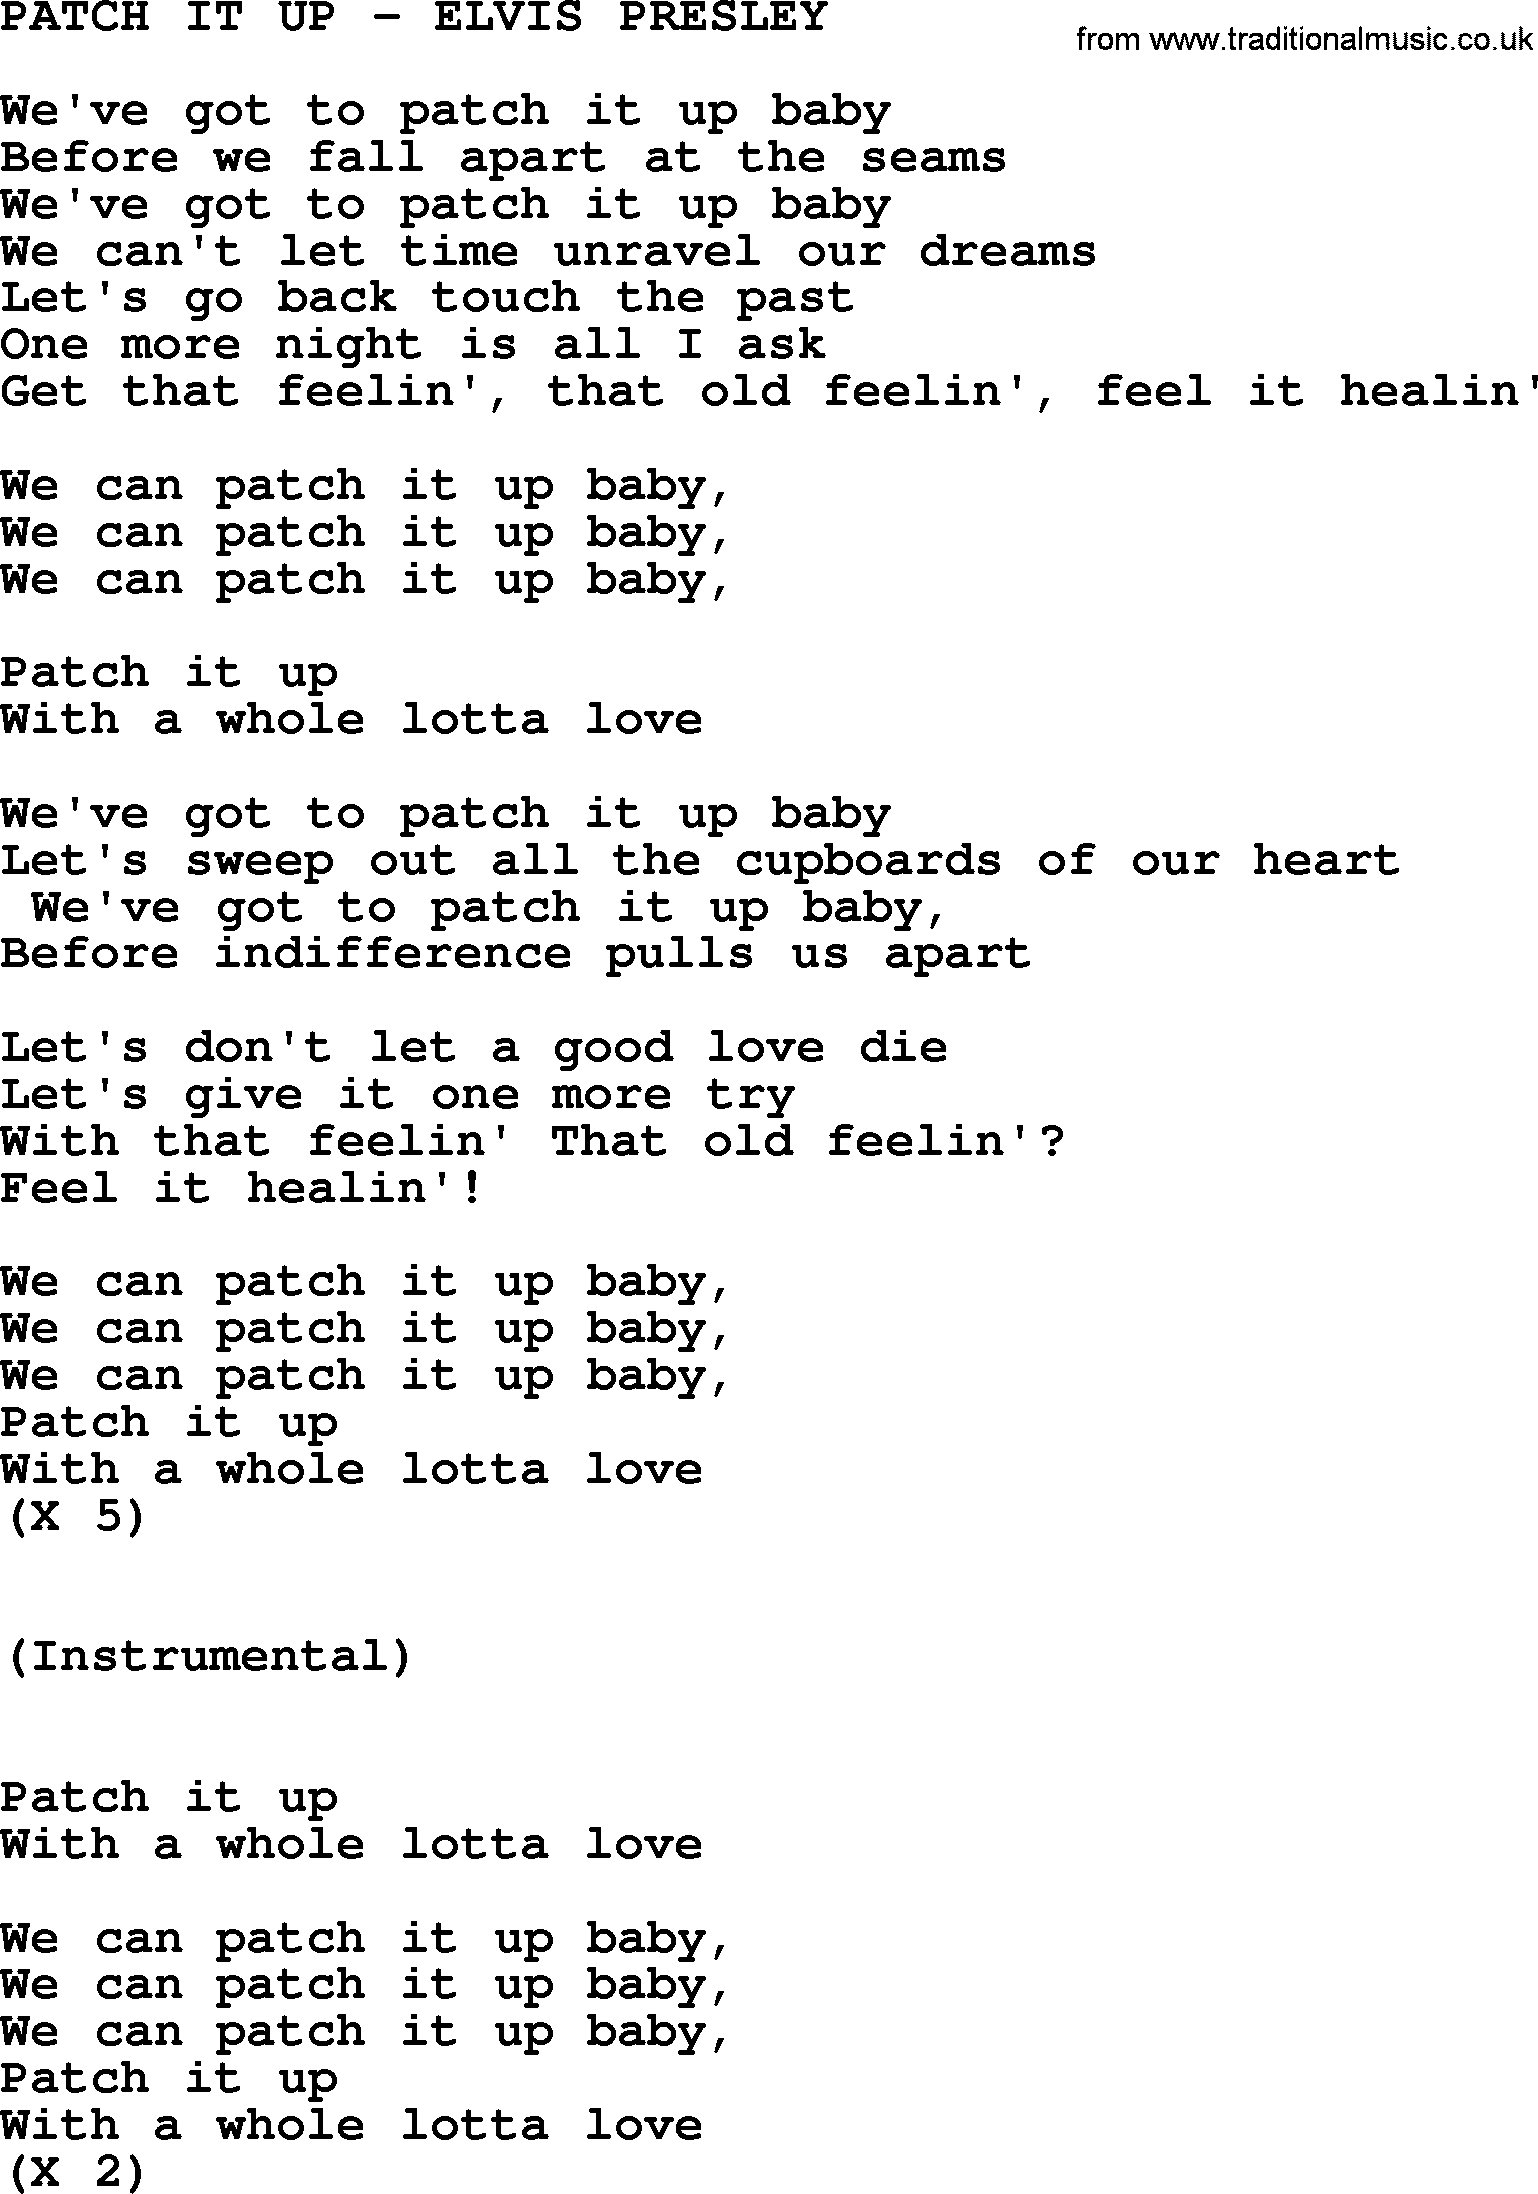 Elvis Presley song: Patch It Up-Elvis Presley-.txt lyrics and chords